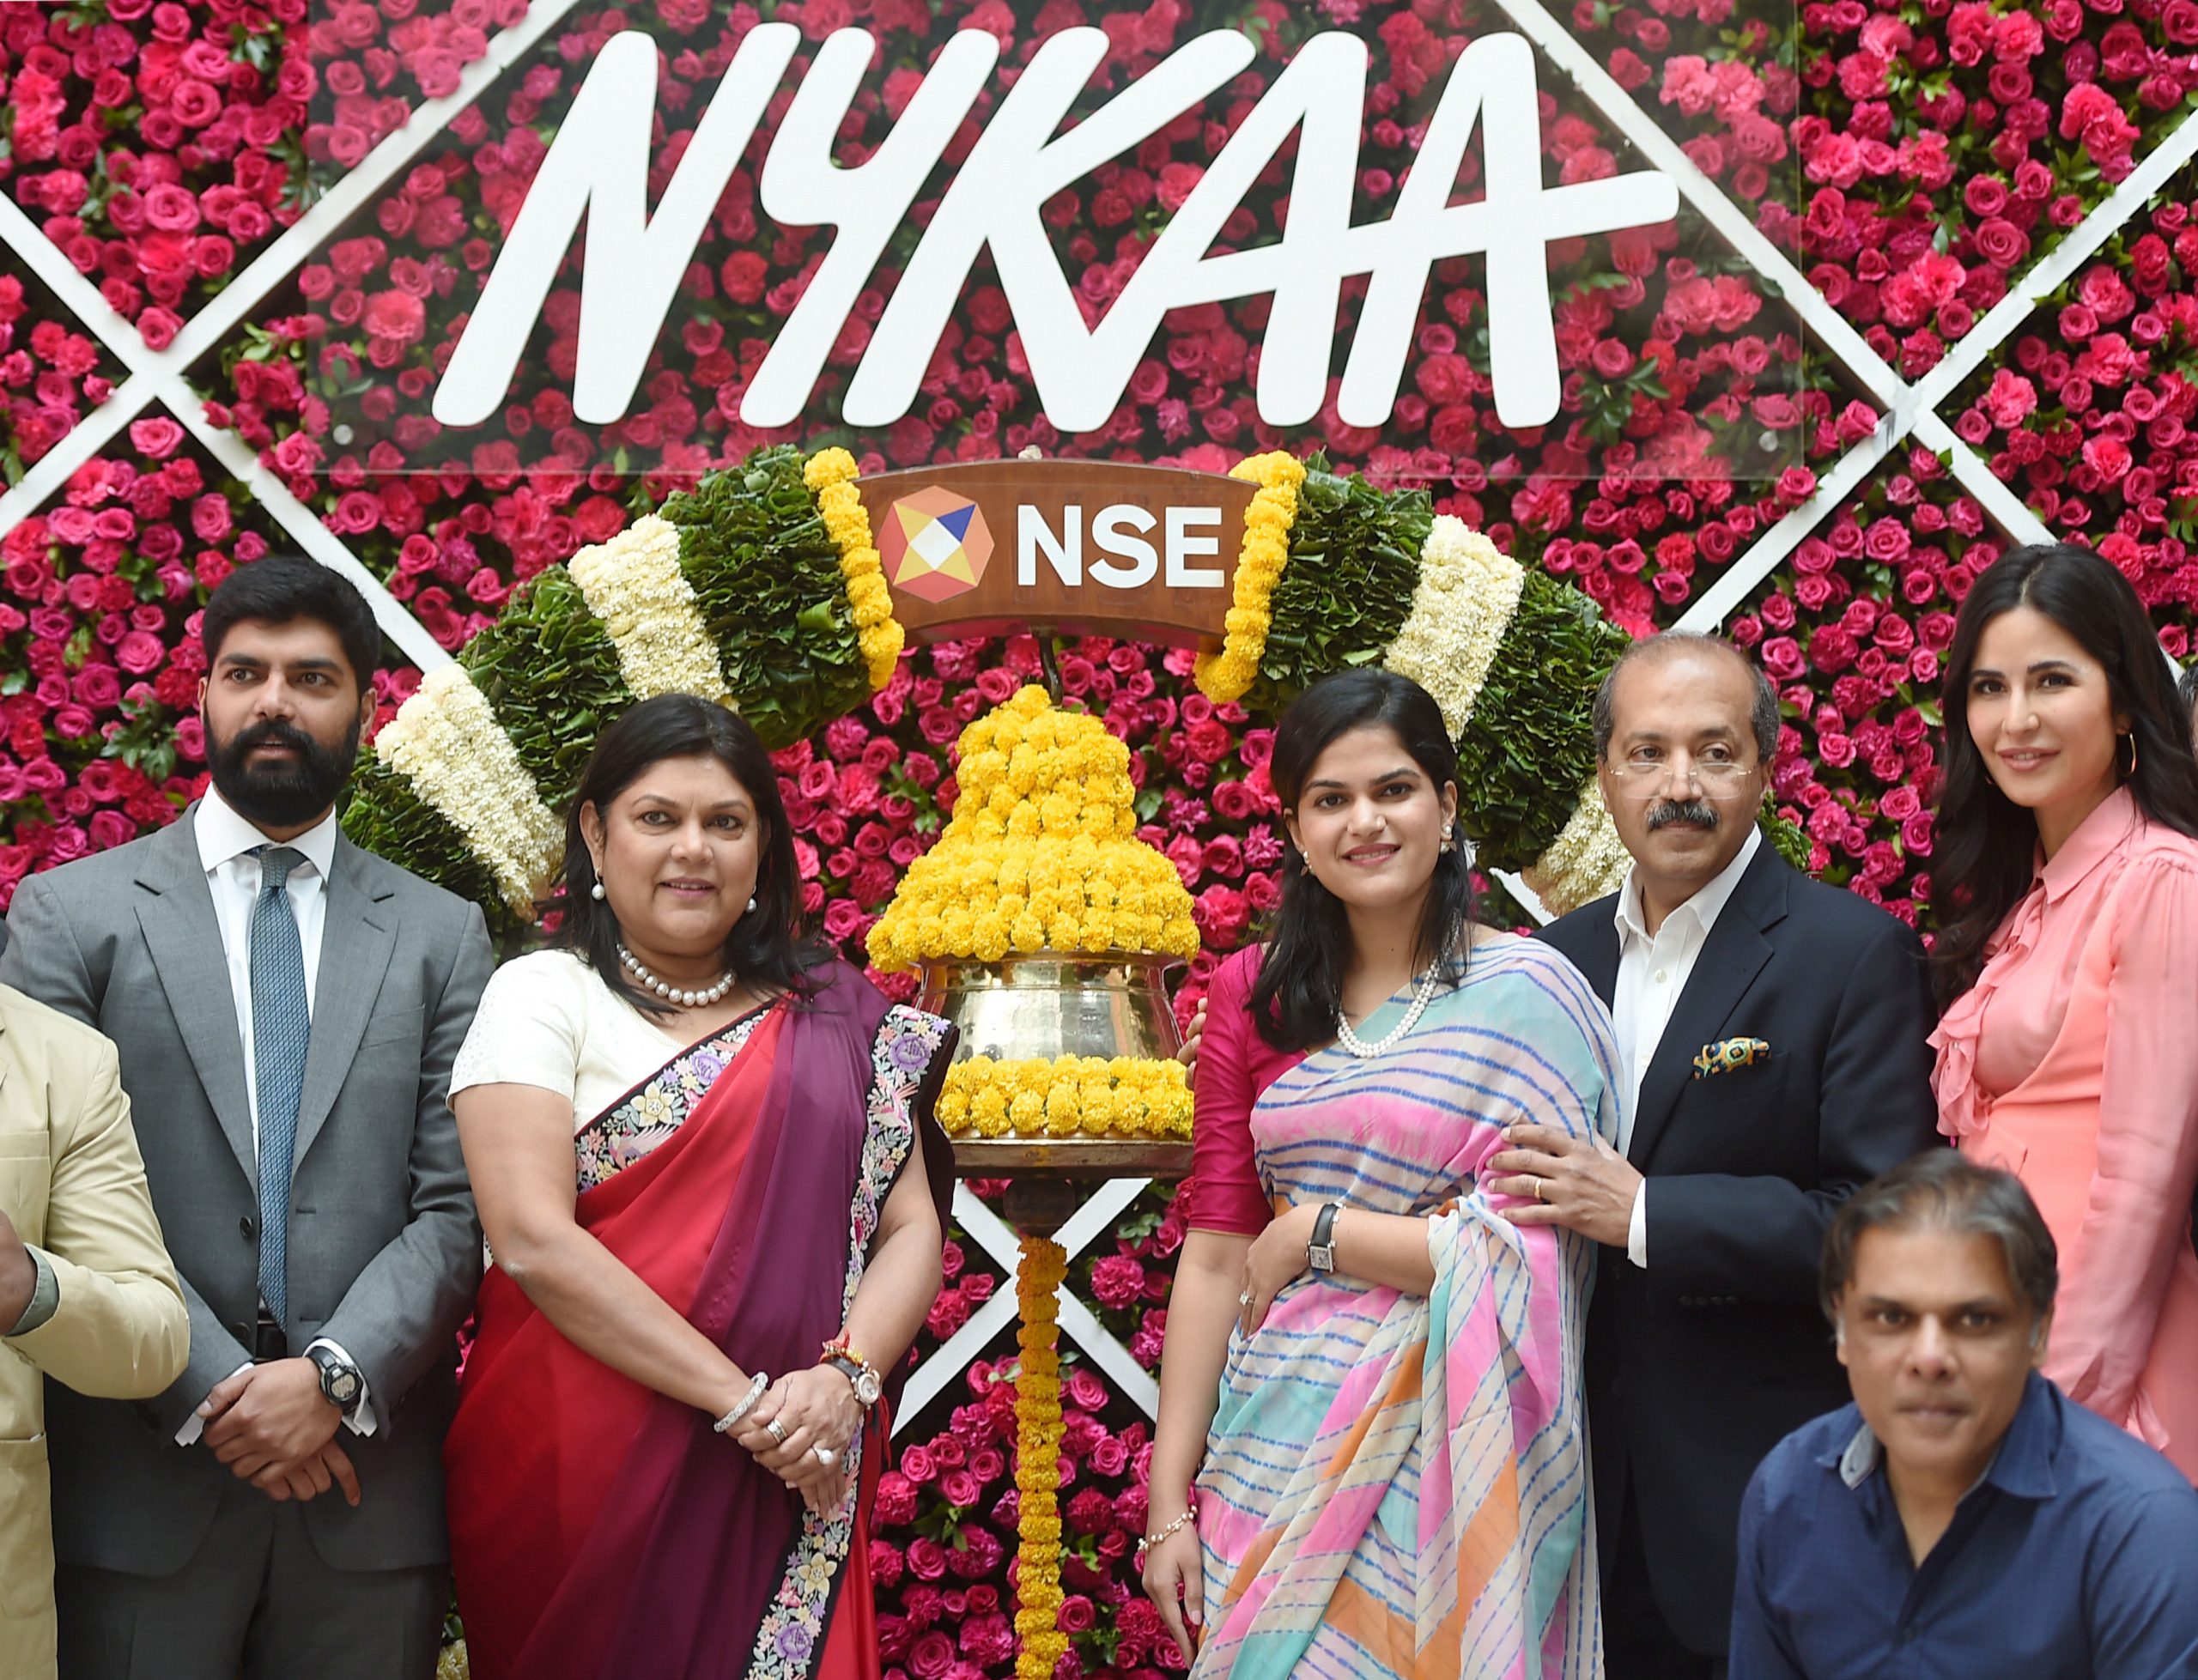 Nykaa founder Falguni Nayar becomes Indias wealthiest self-made female billionaire